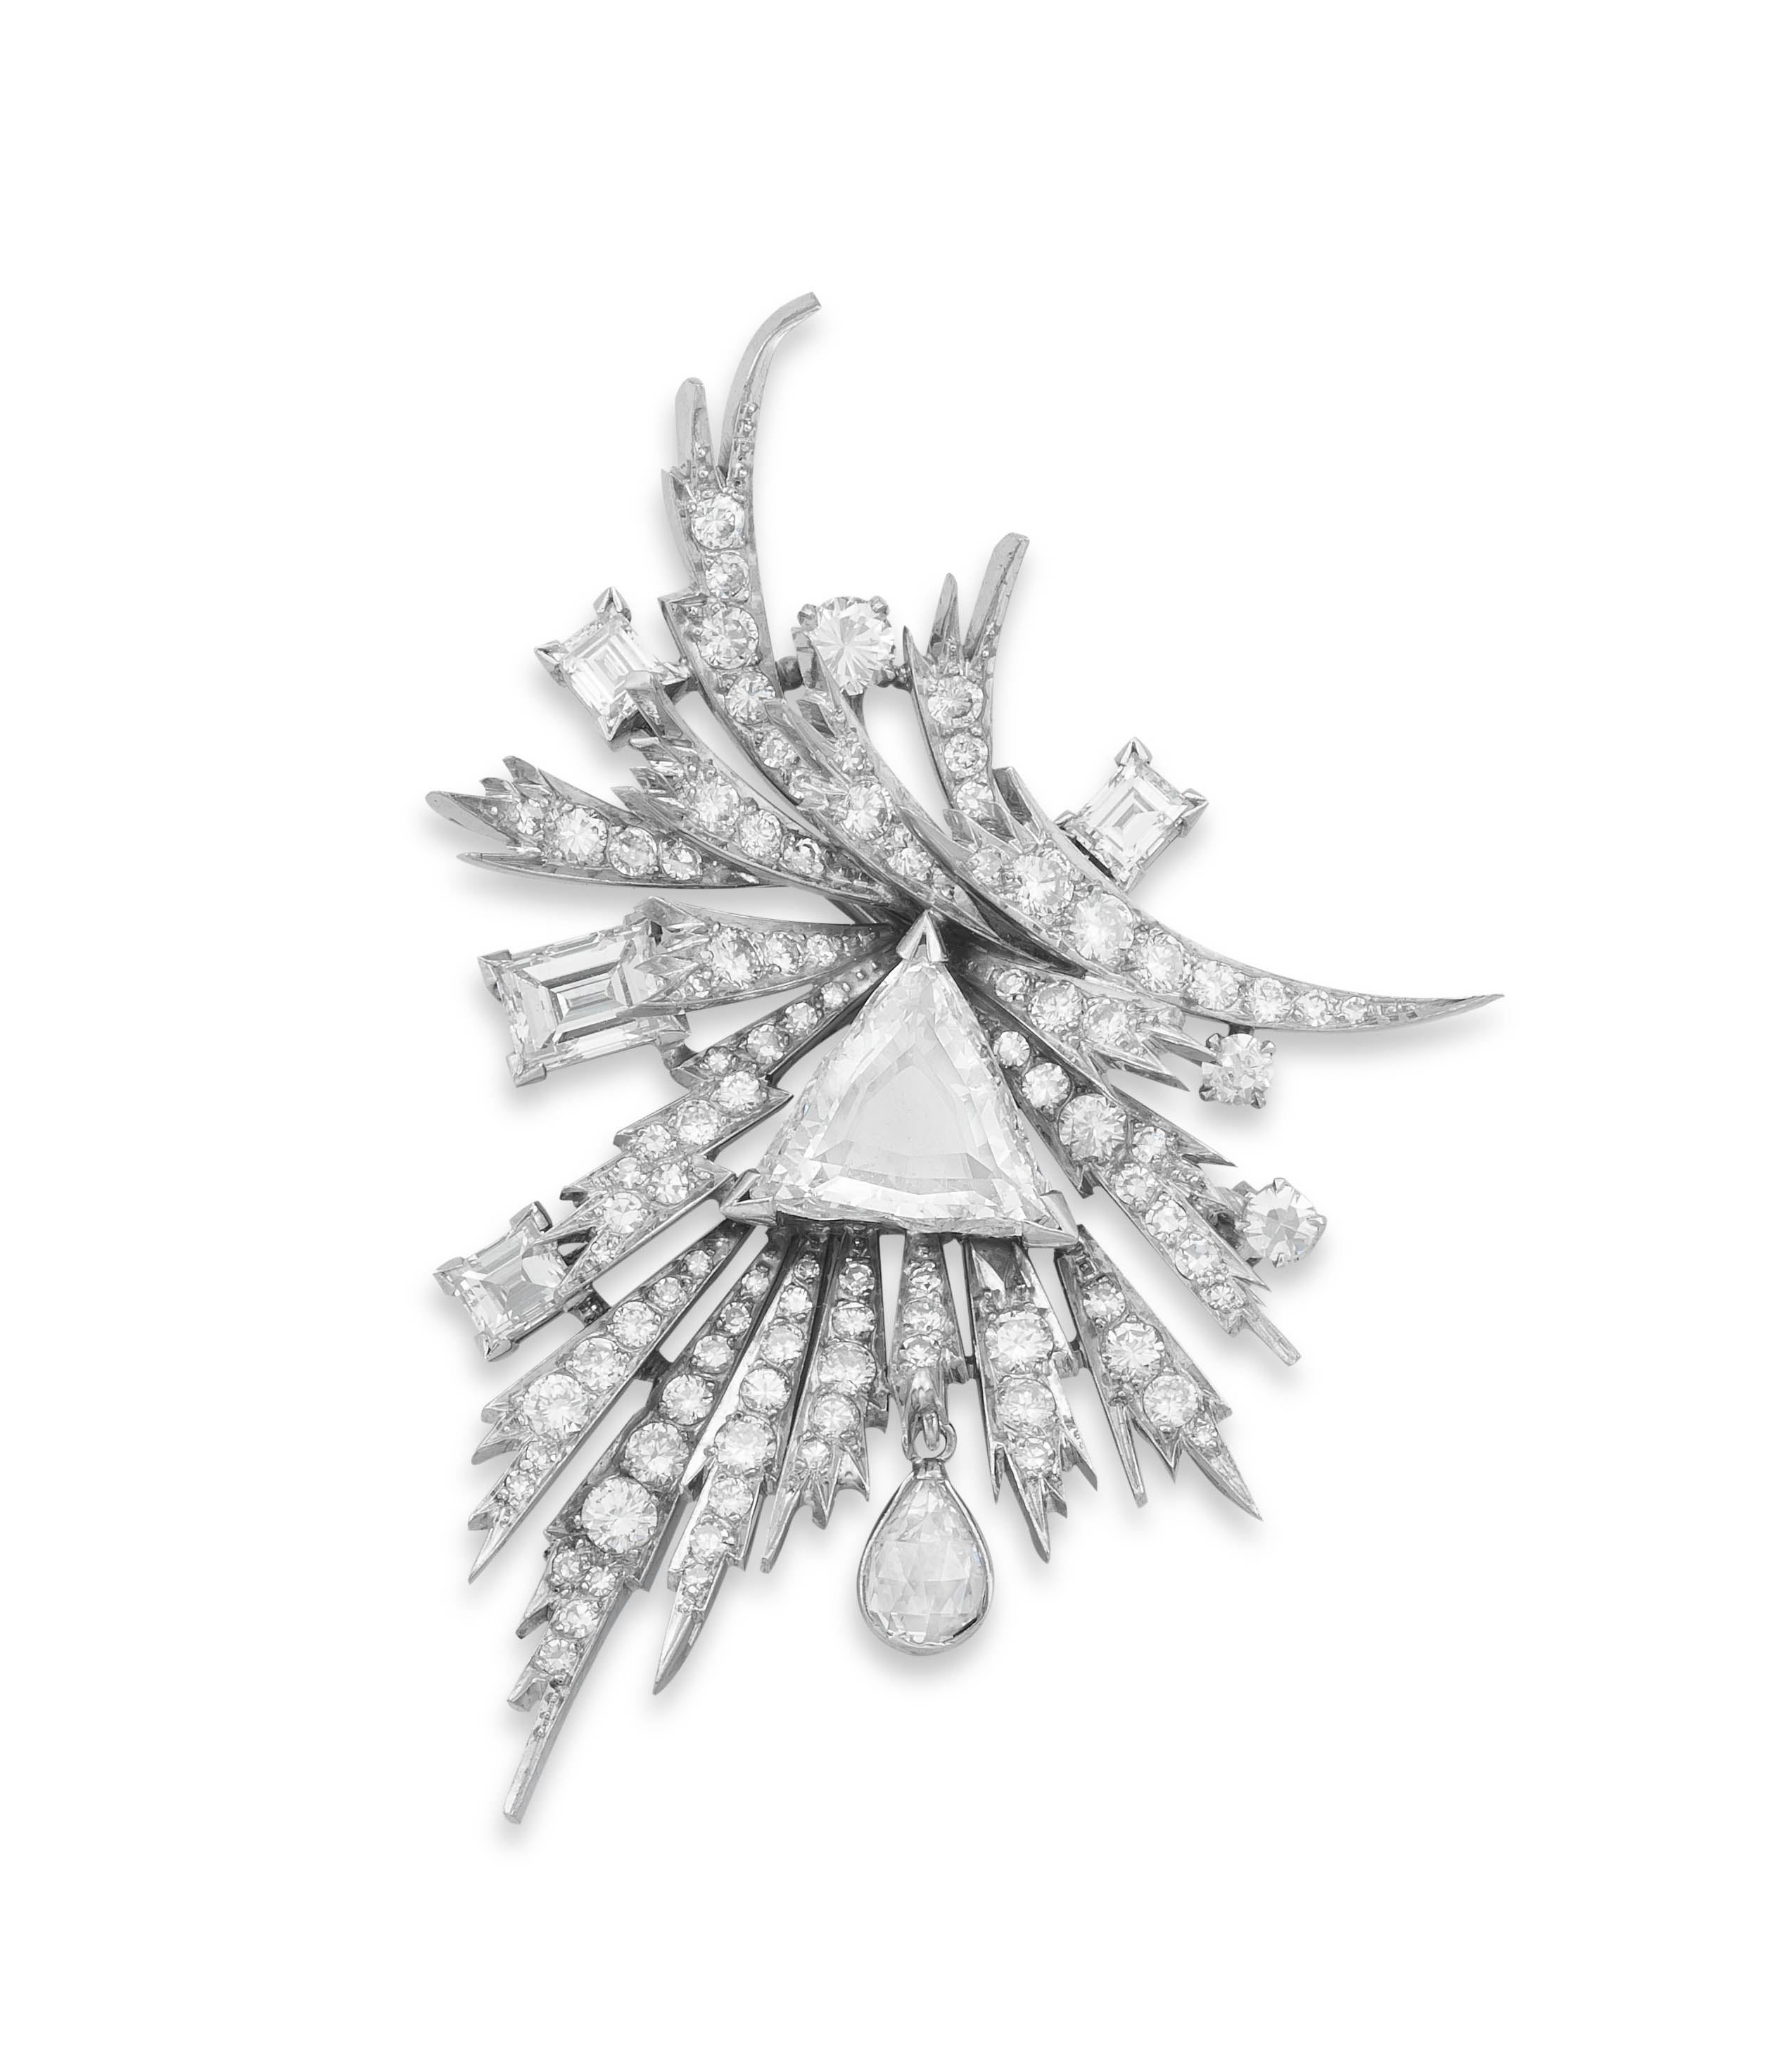 Diamond brooch/pendant